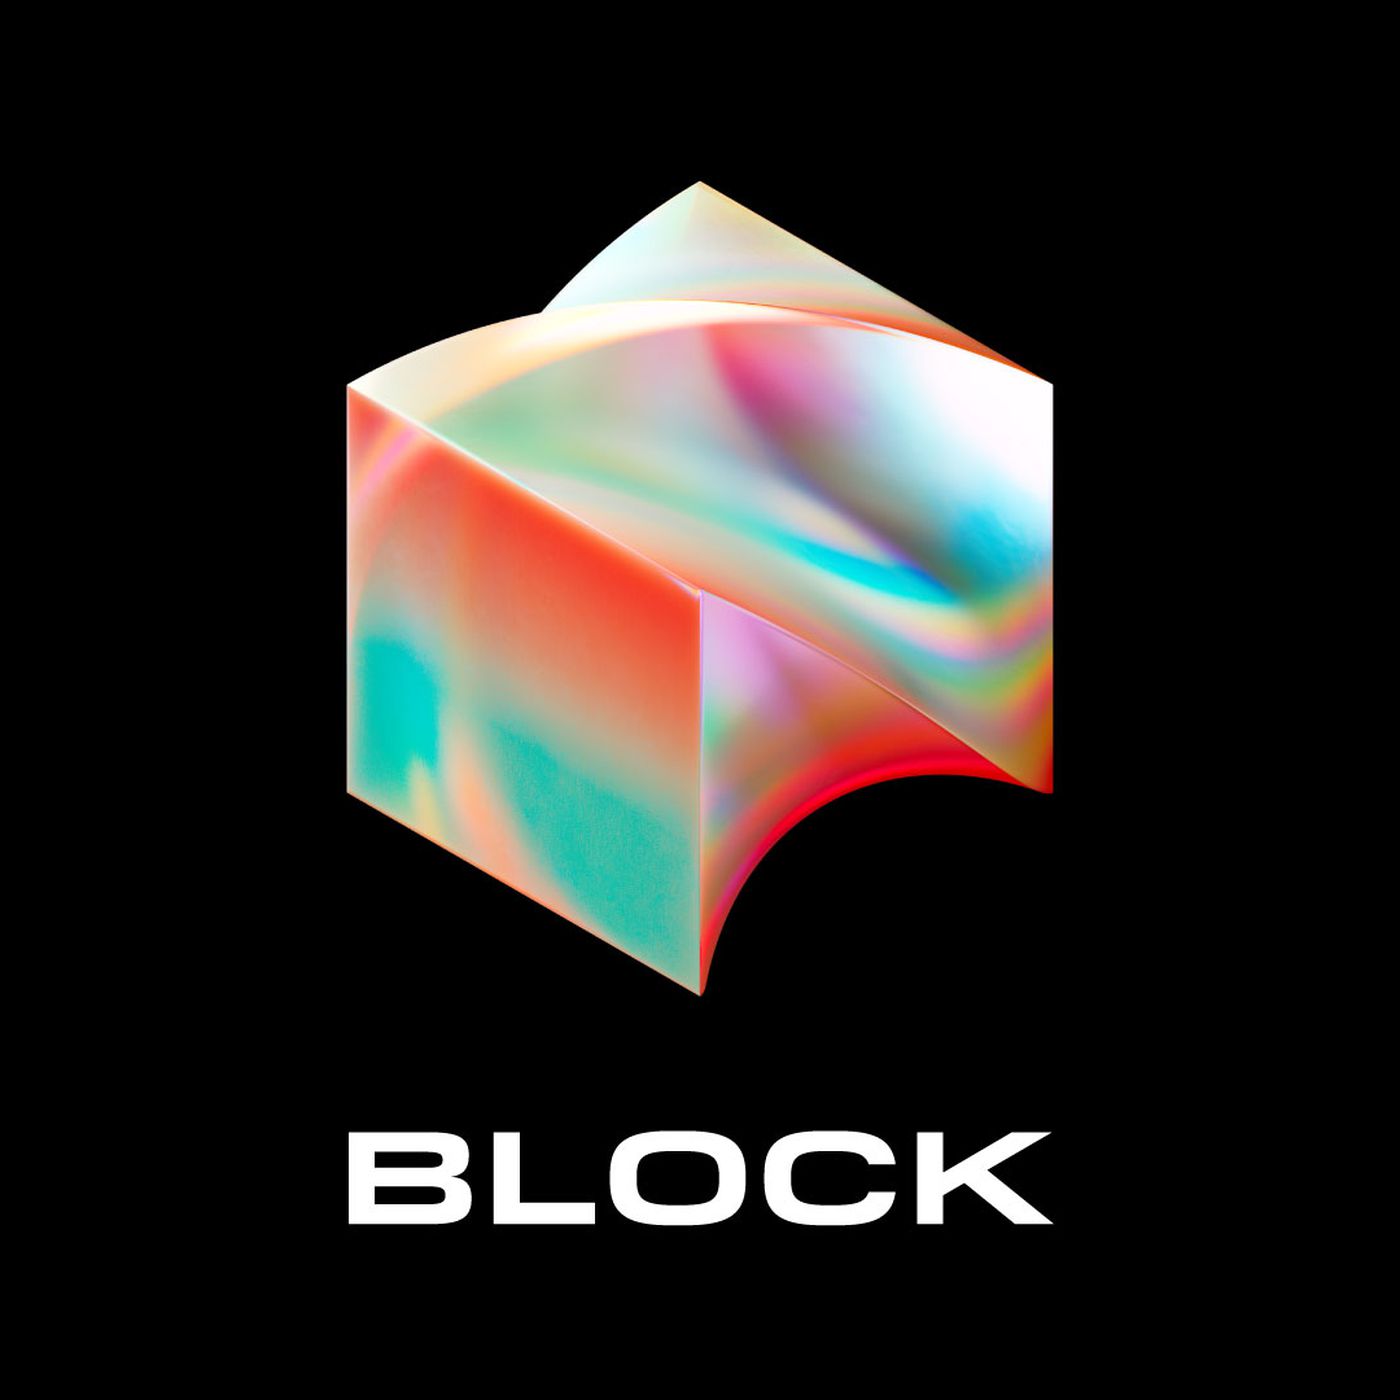 Square-Name-Change-To-Block-Uply-Media-Inc-Blockchain-News